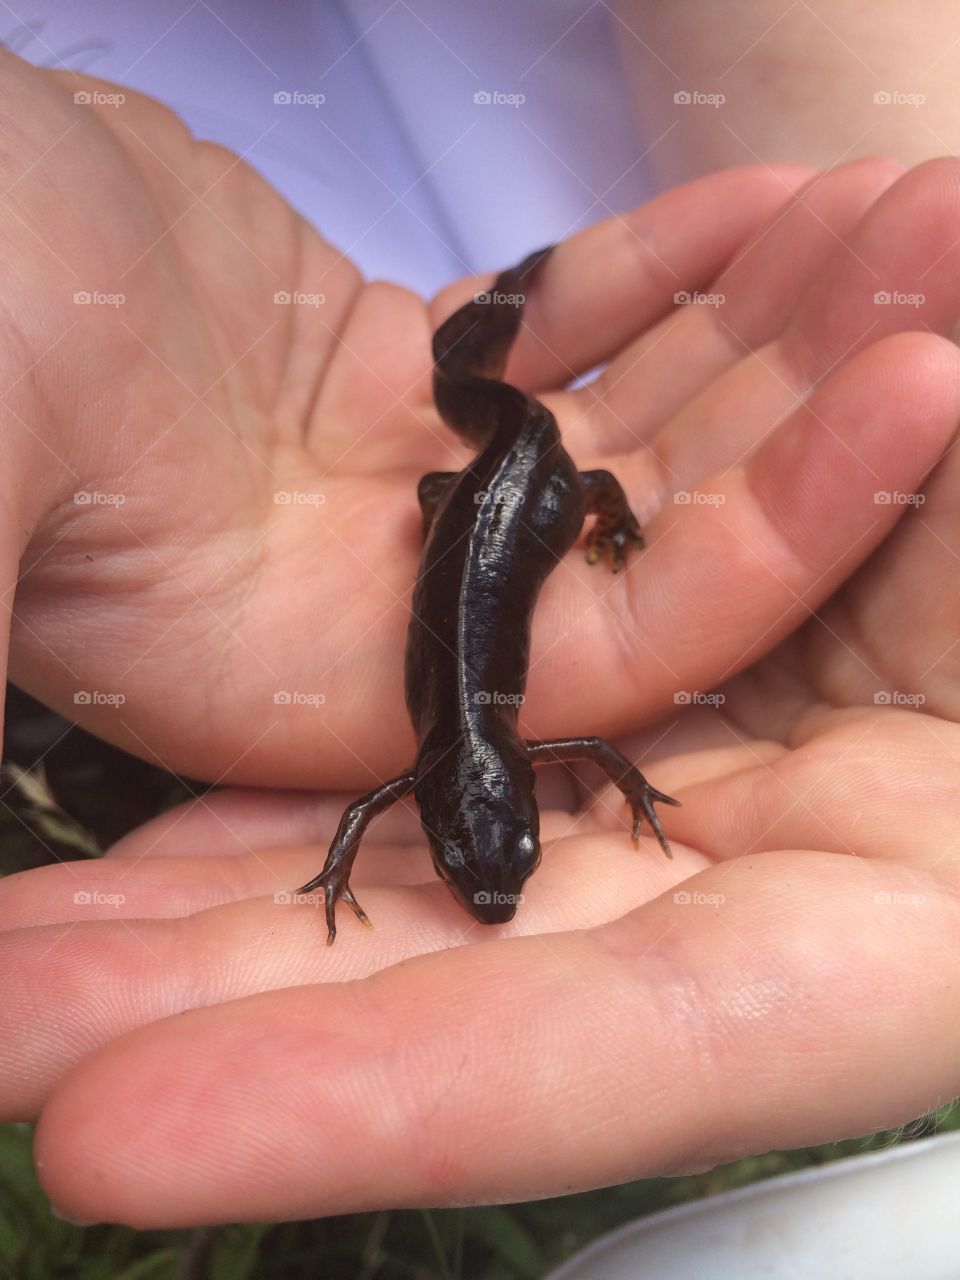 Salamander. School science class at the lake